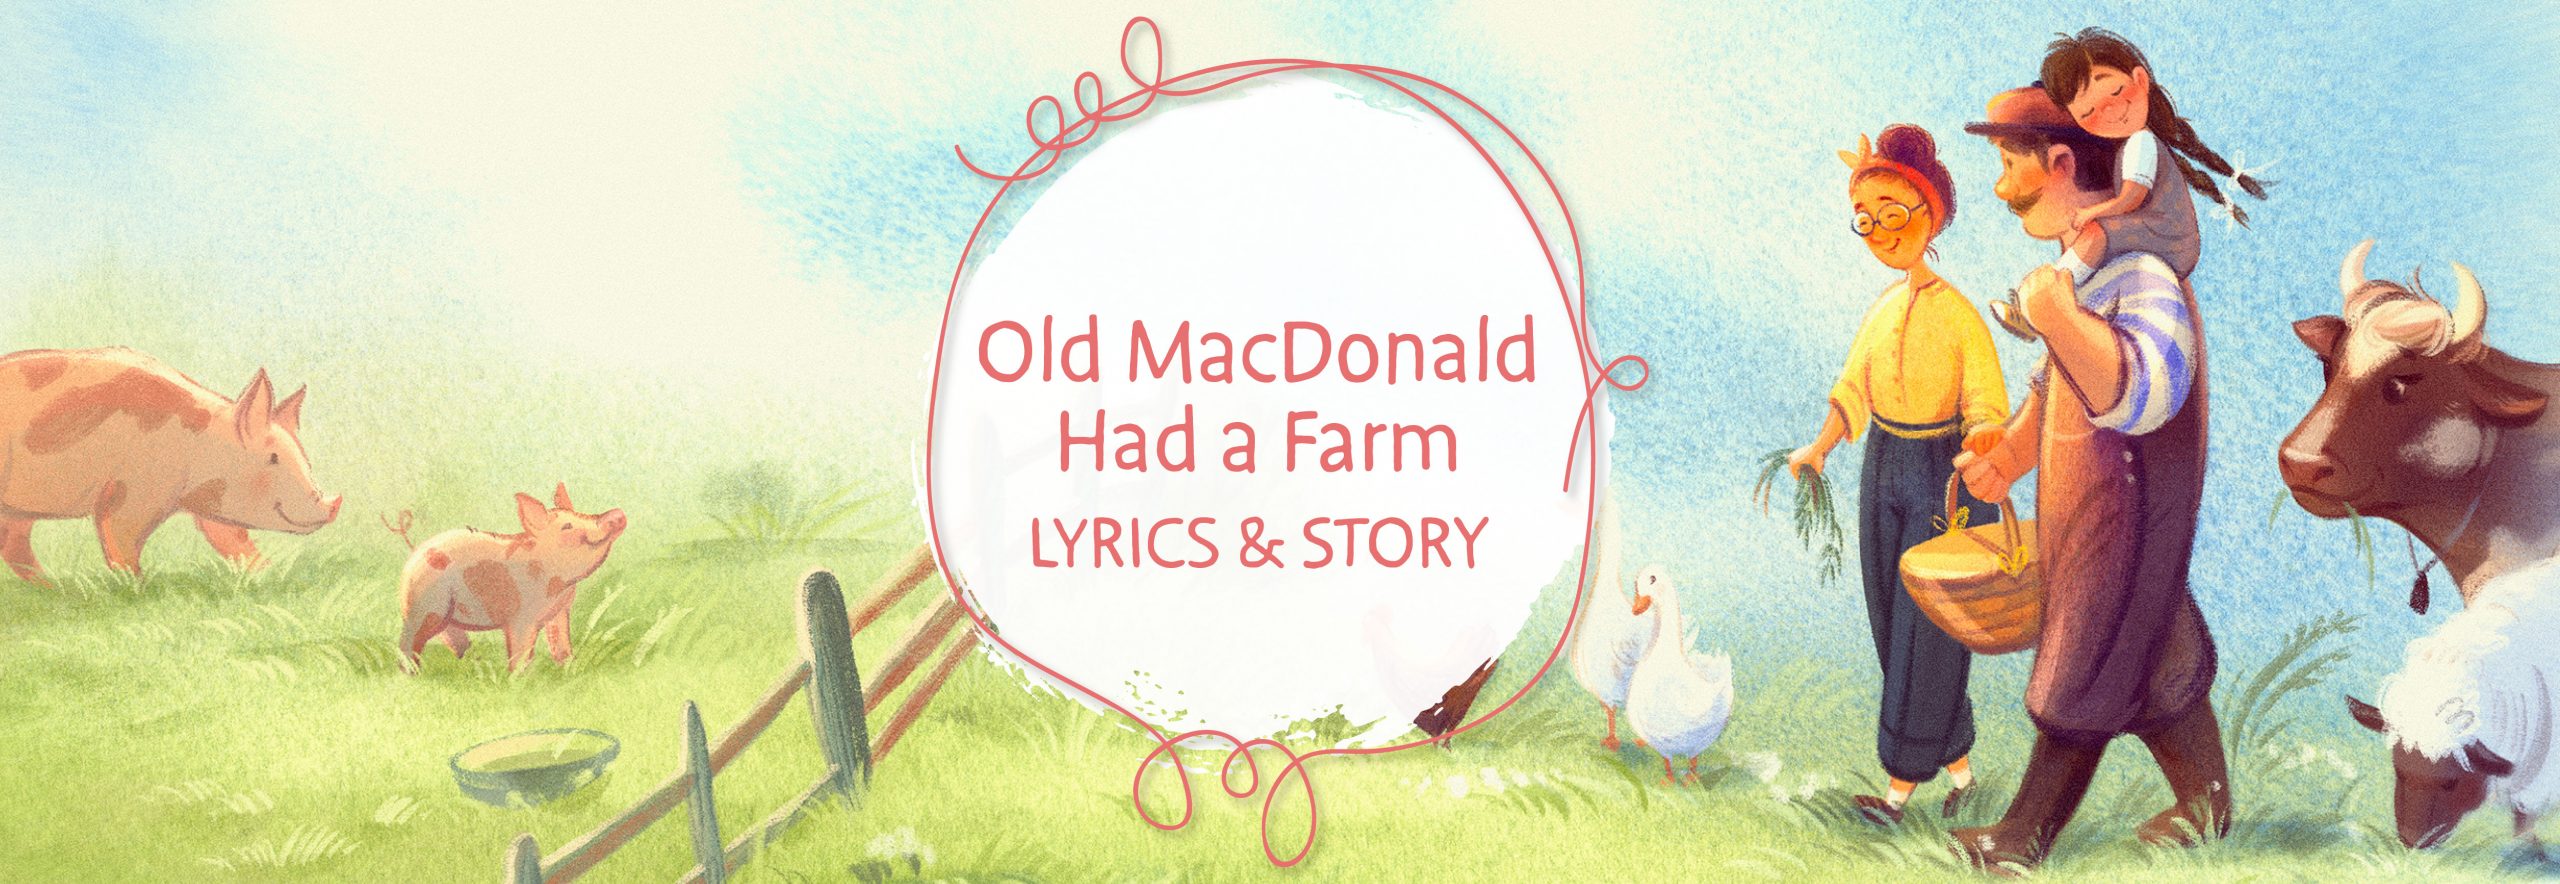 Old MacDonald Had a Farm - The Good and the Beautiful